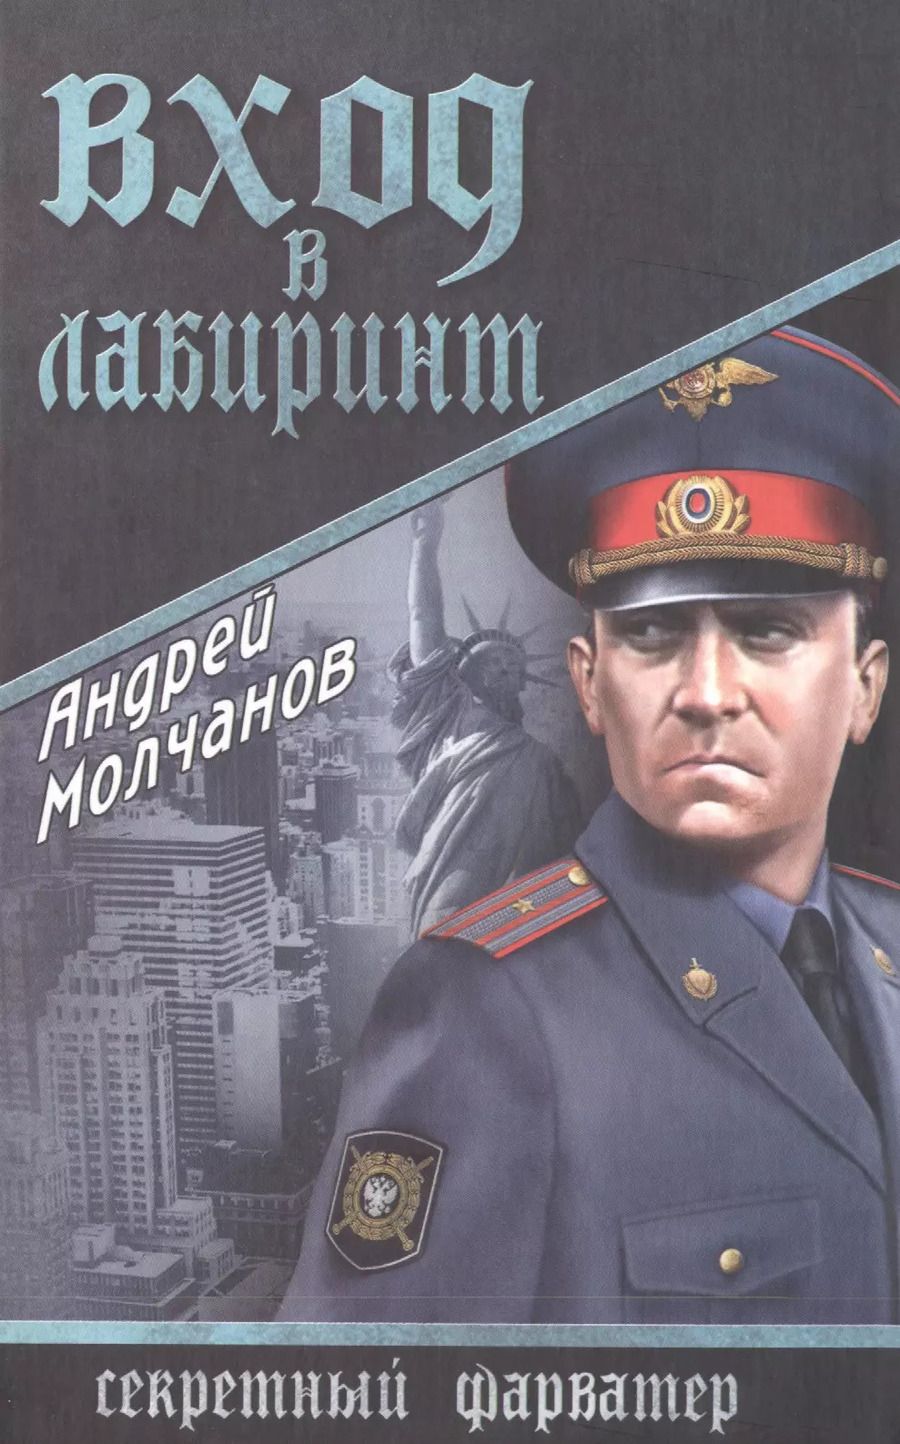 Обложка книги "Андрей Молчанов: Вход в лабиринт"